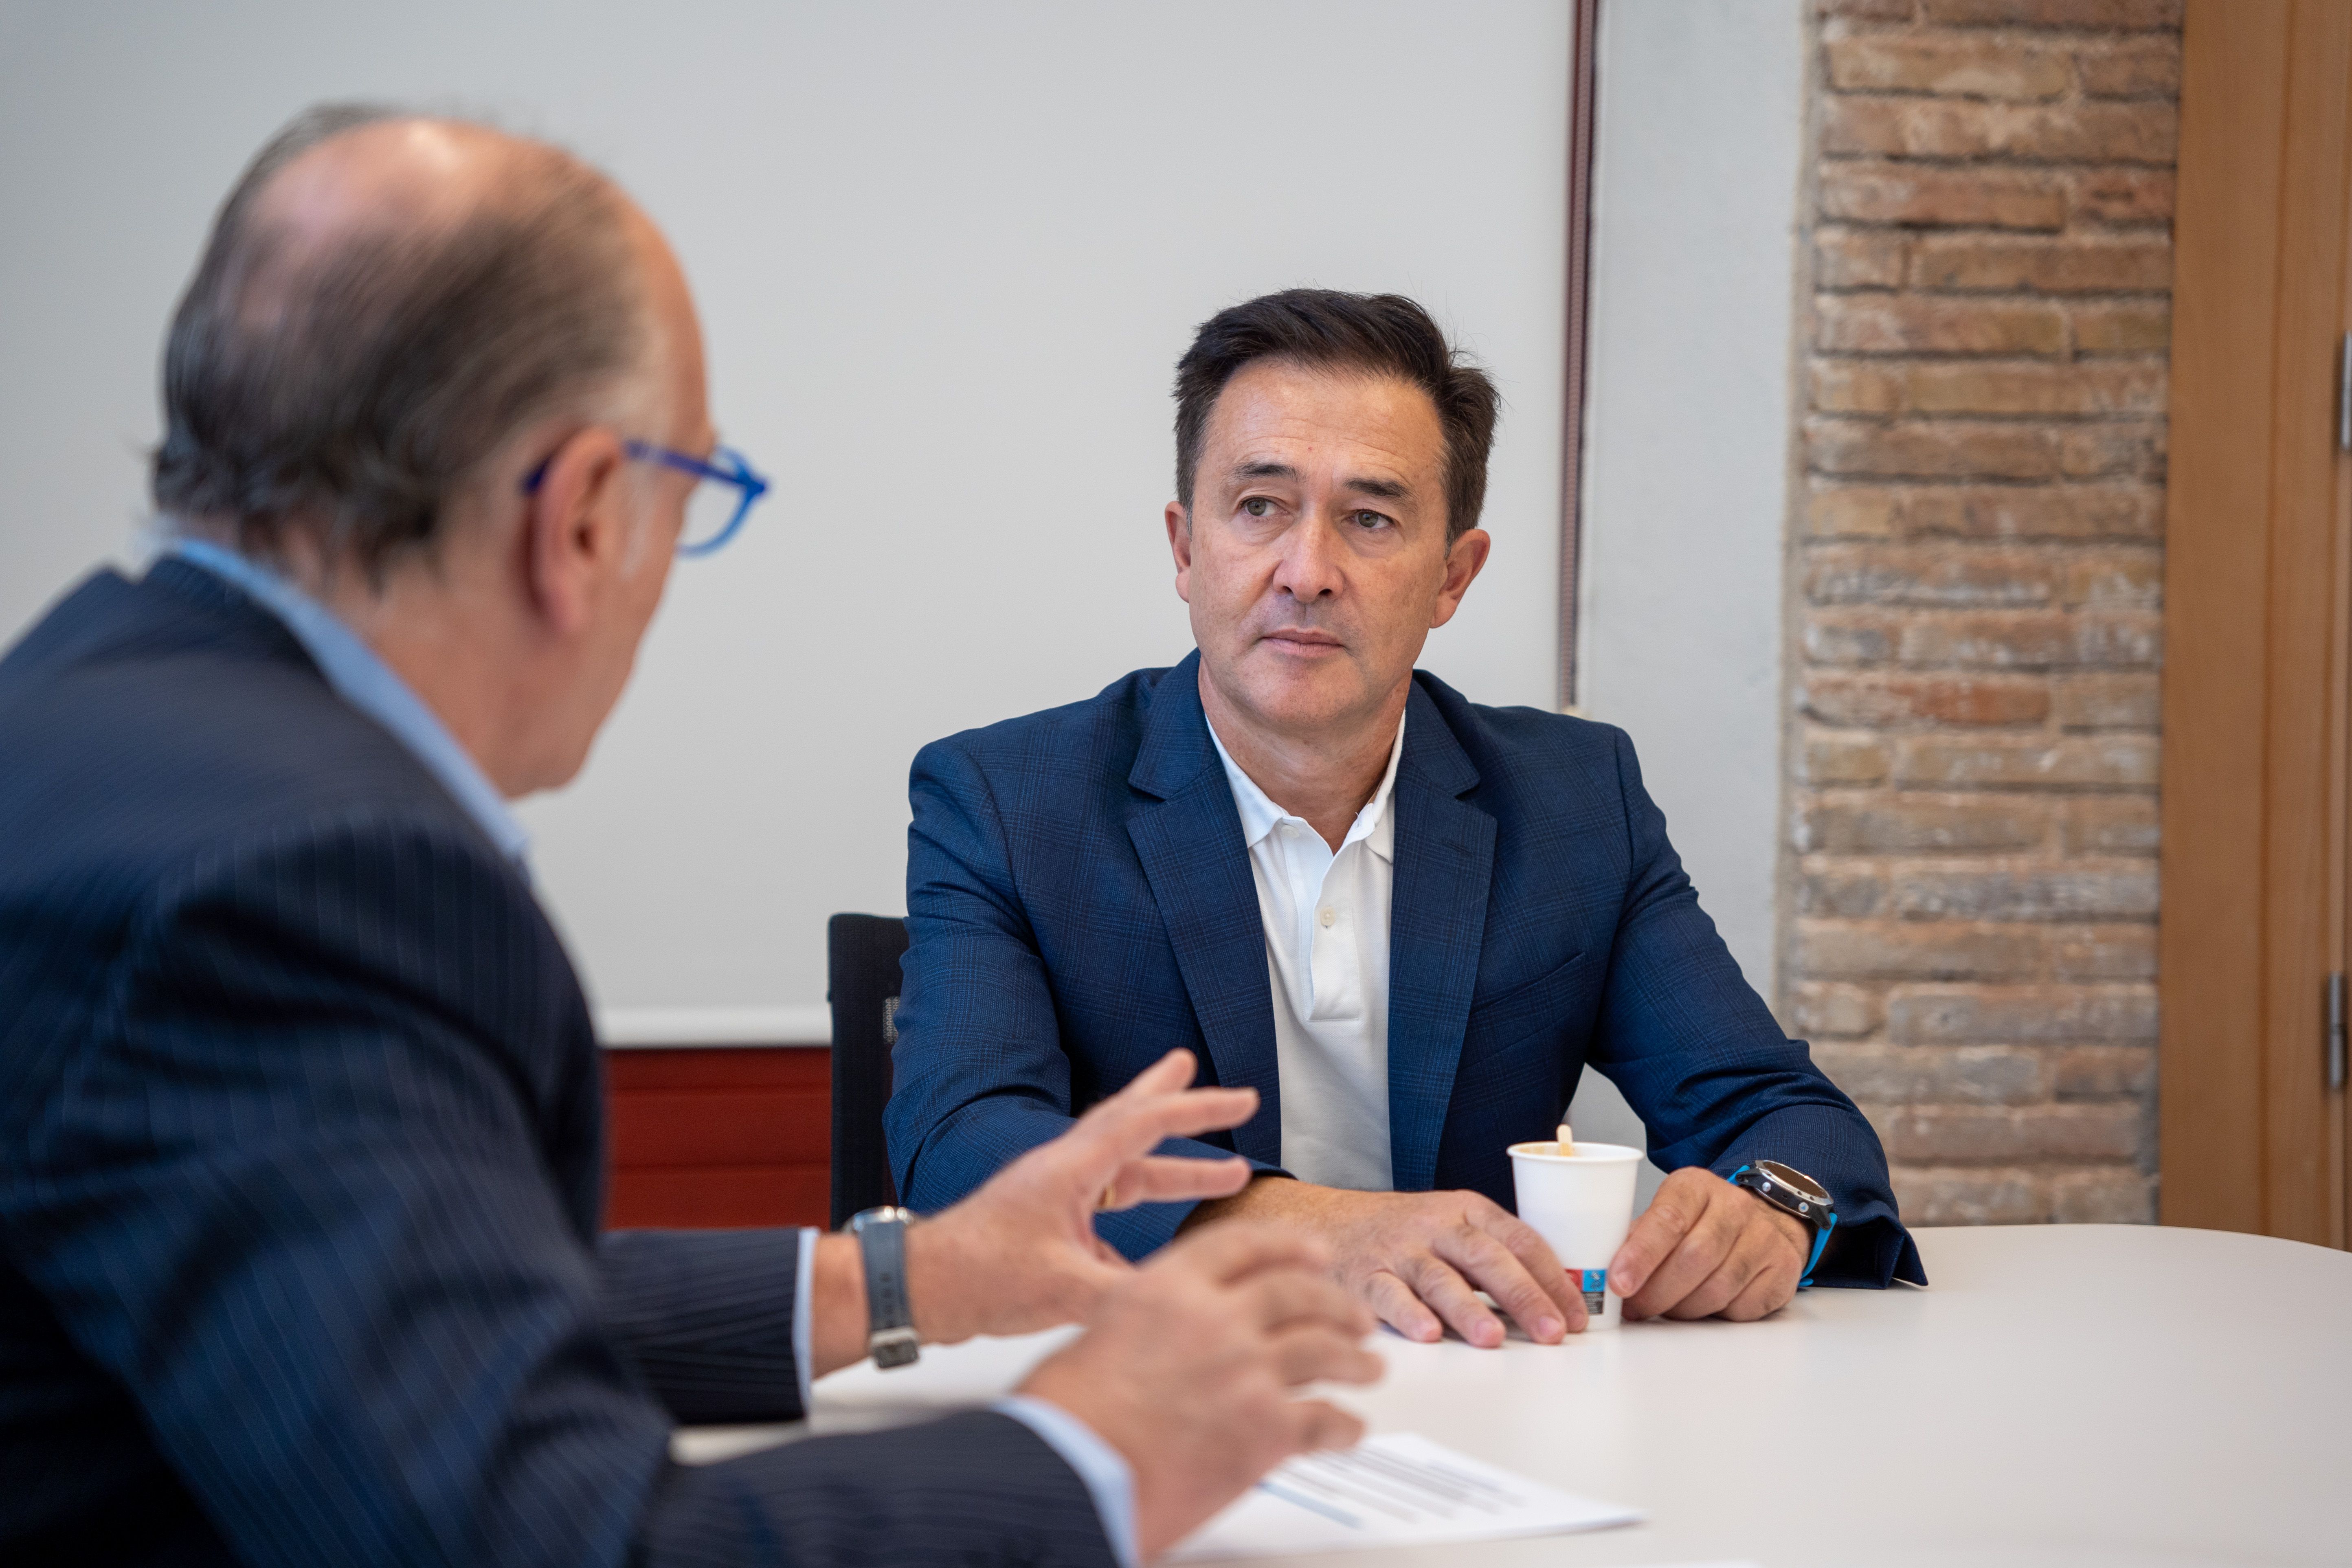 Josep Grau entrevista a Andreu Vilamitjana, CEO de Cisco Systems España y Portugal | Carolina Santos